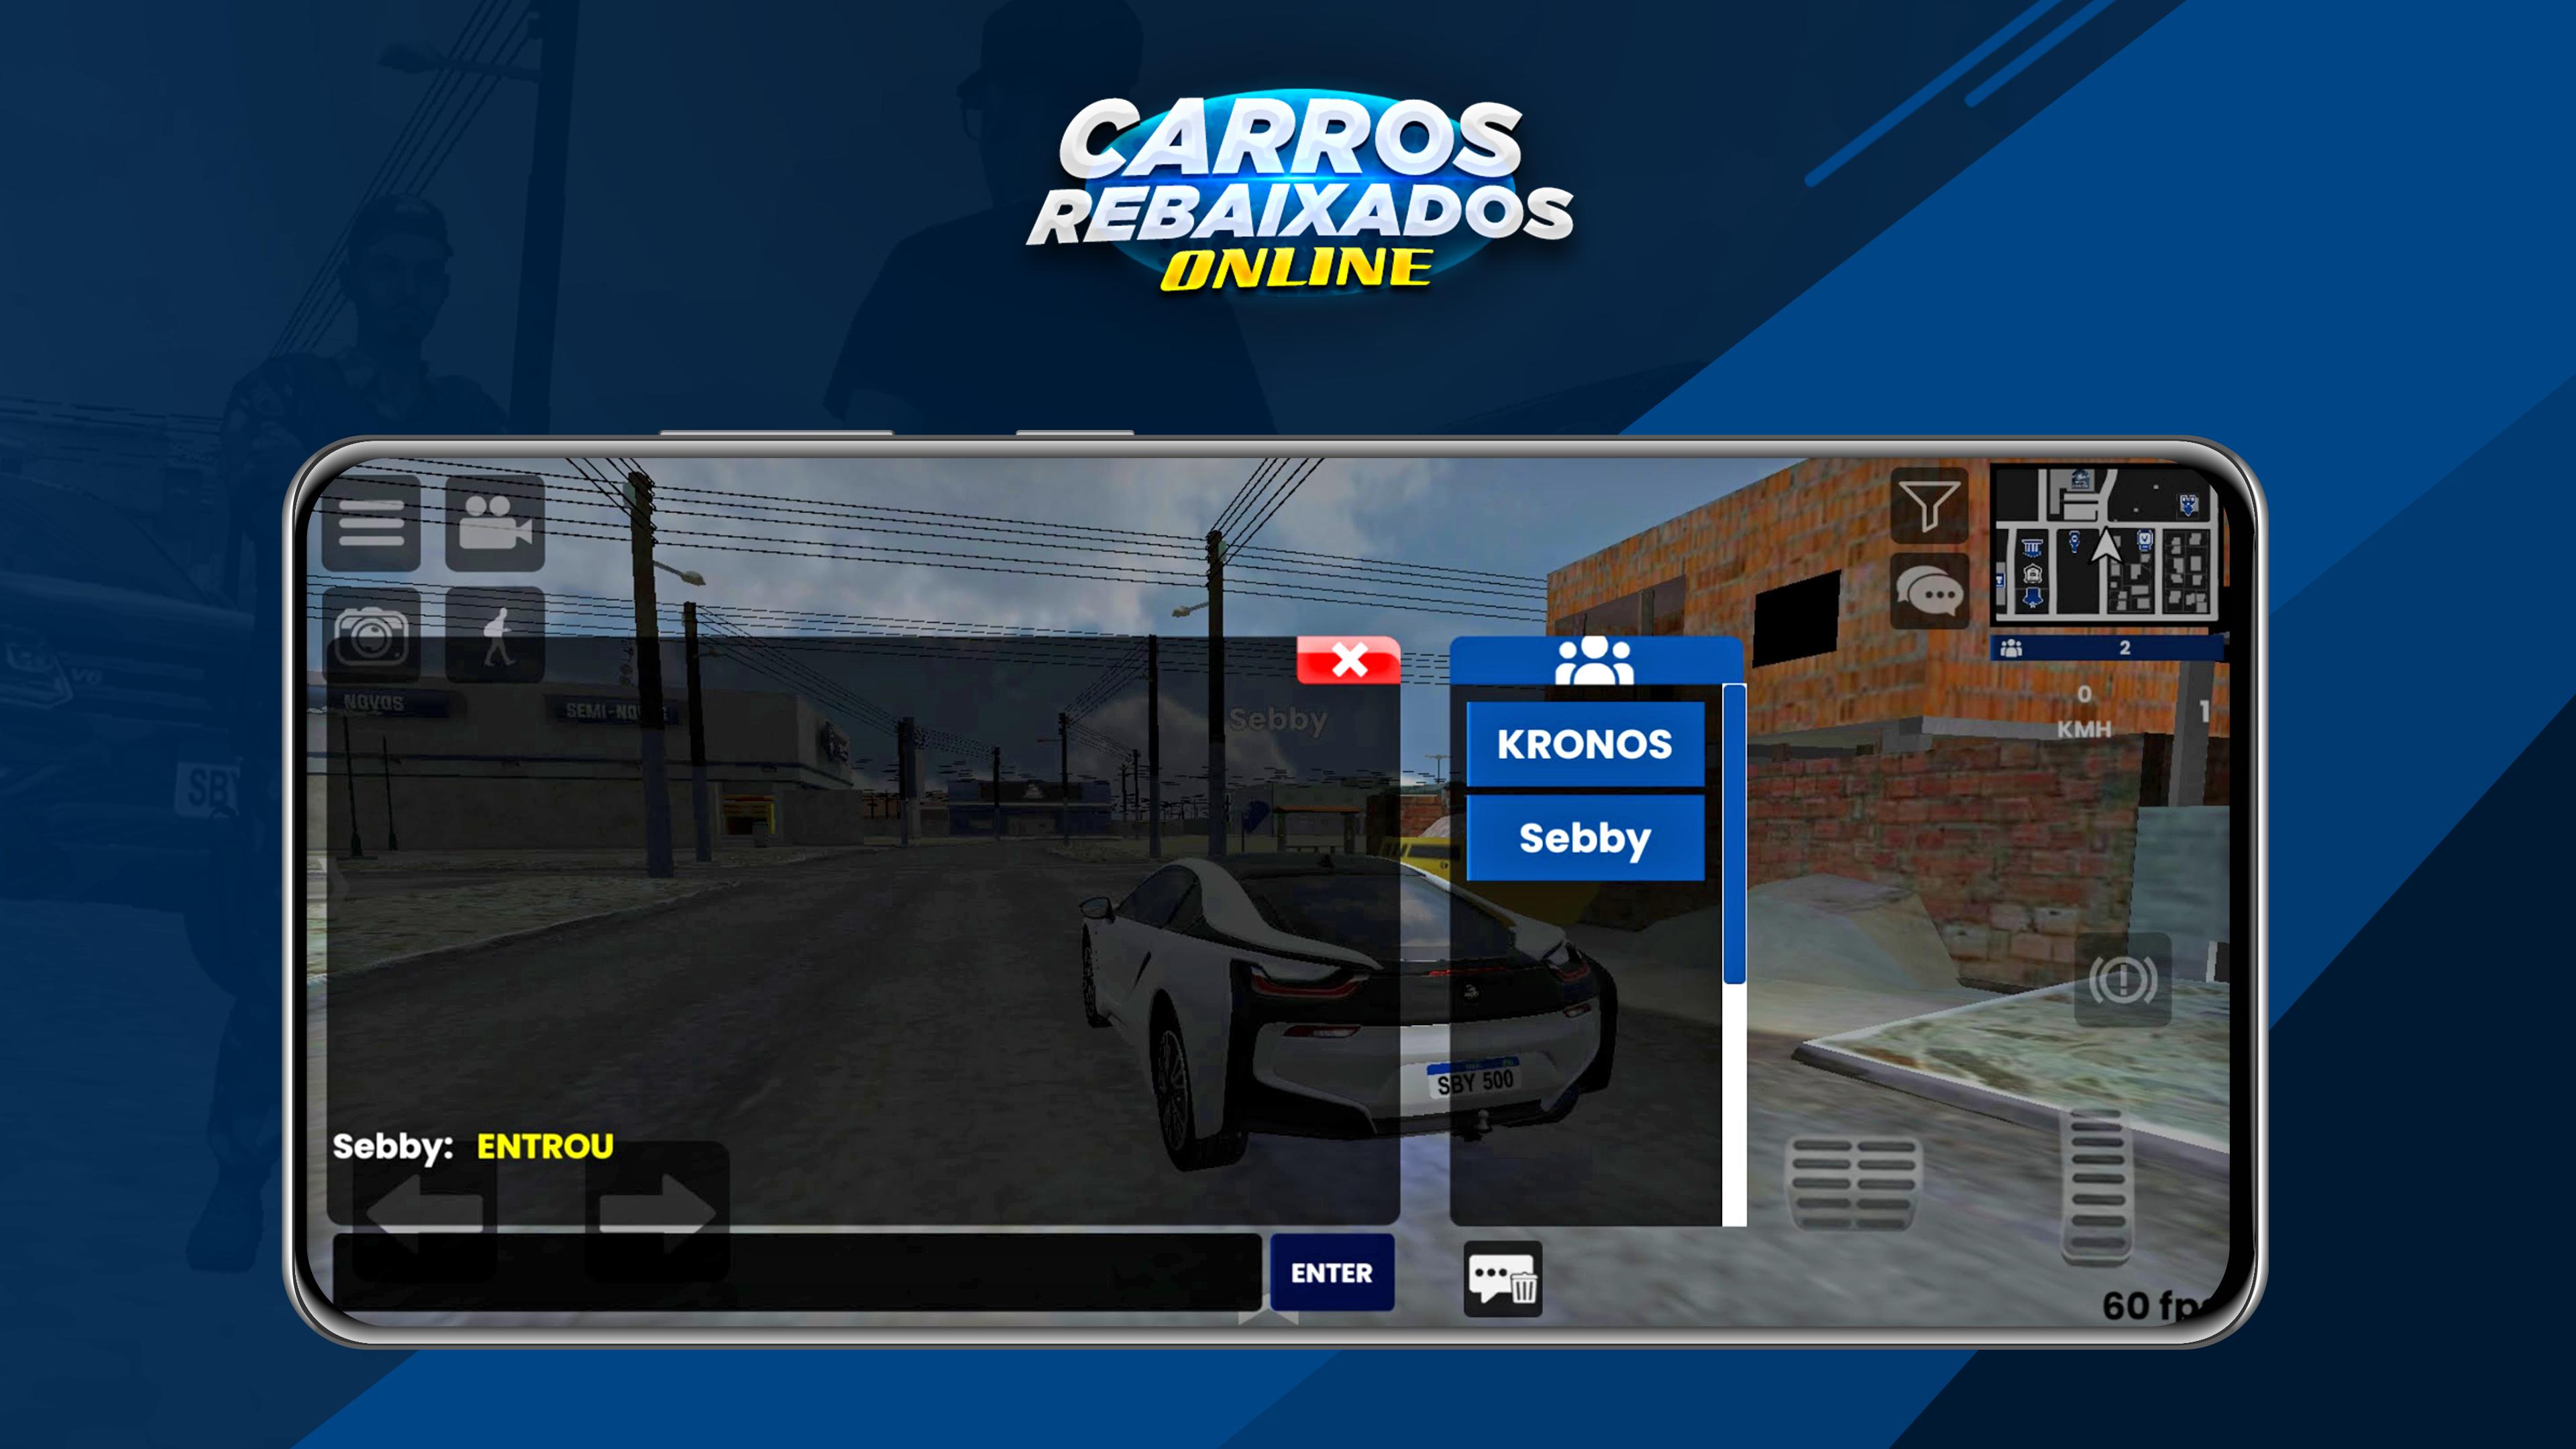 Download & Play CARROS BAIXOS on PC & Mac (Emulator)